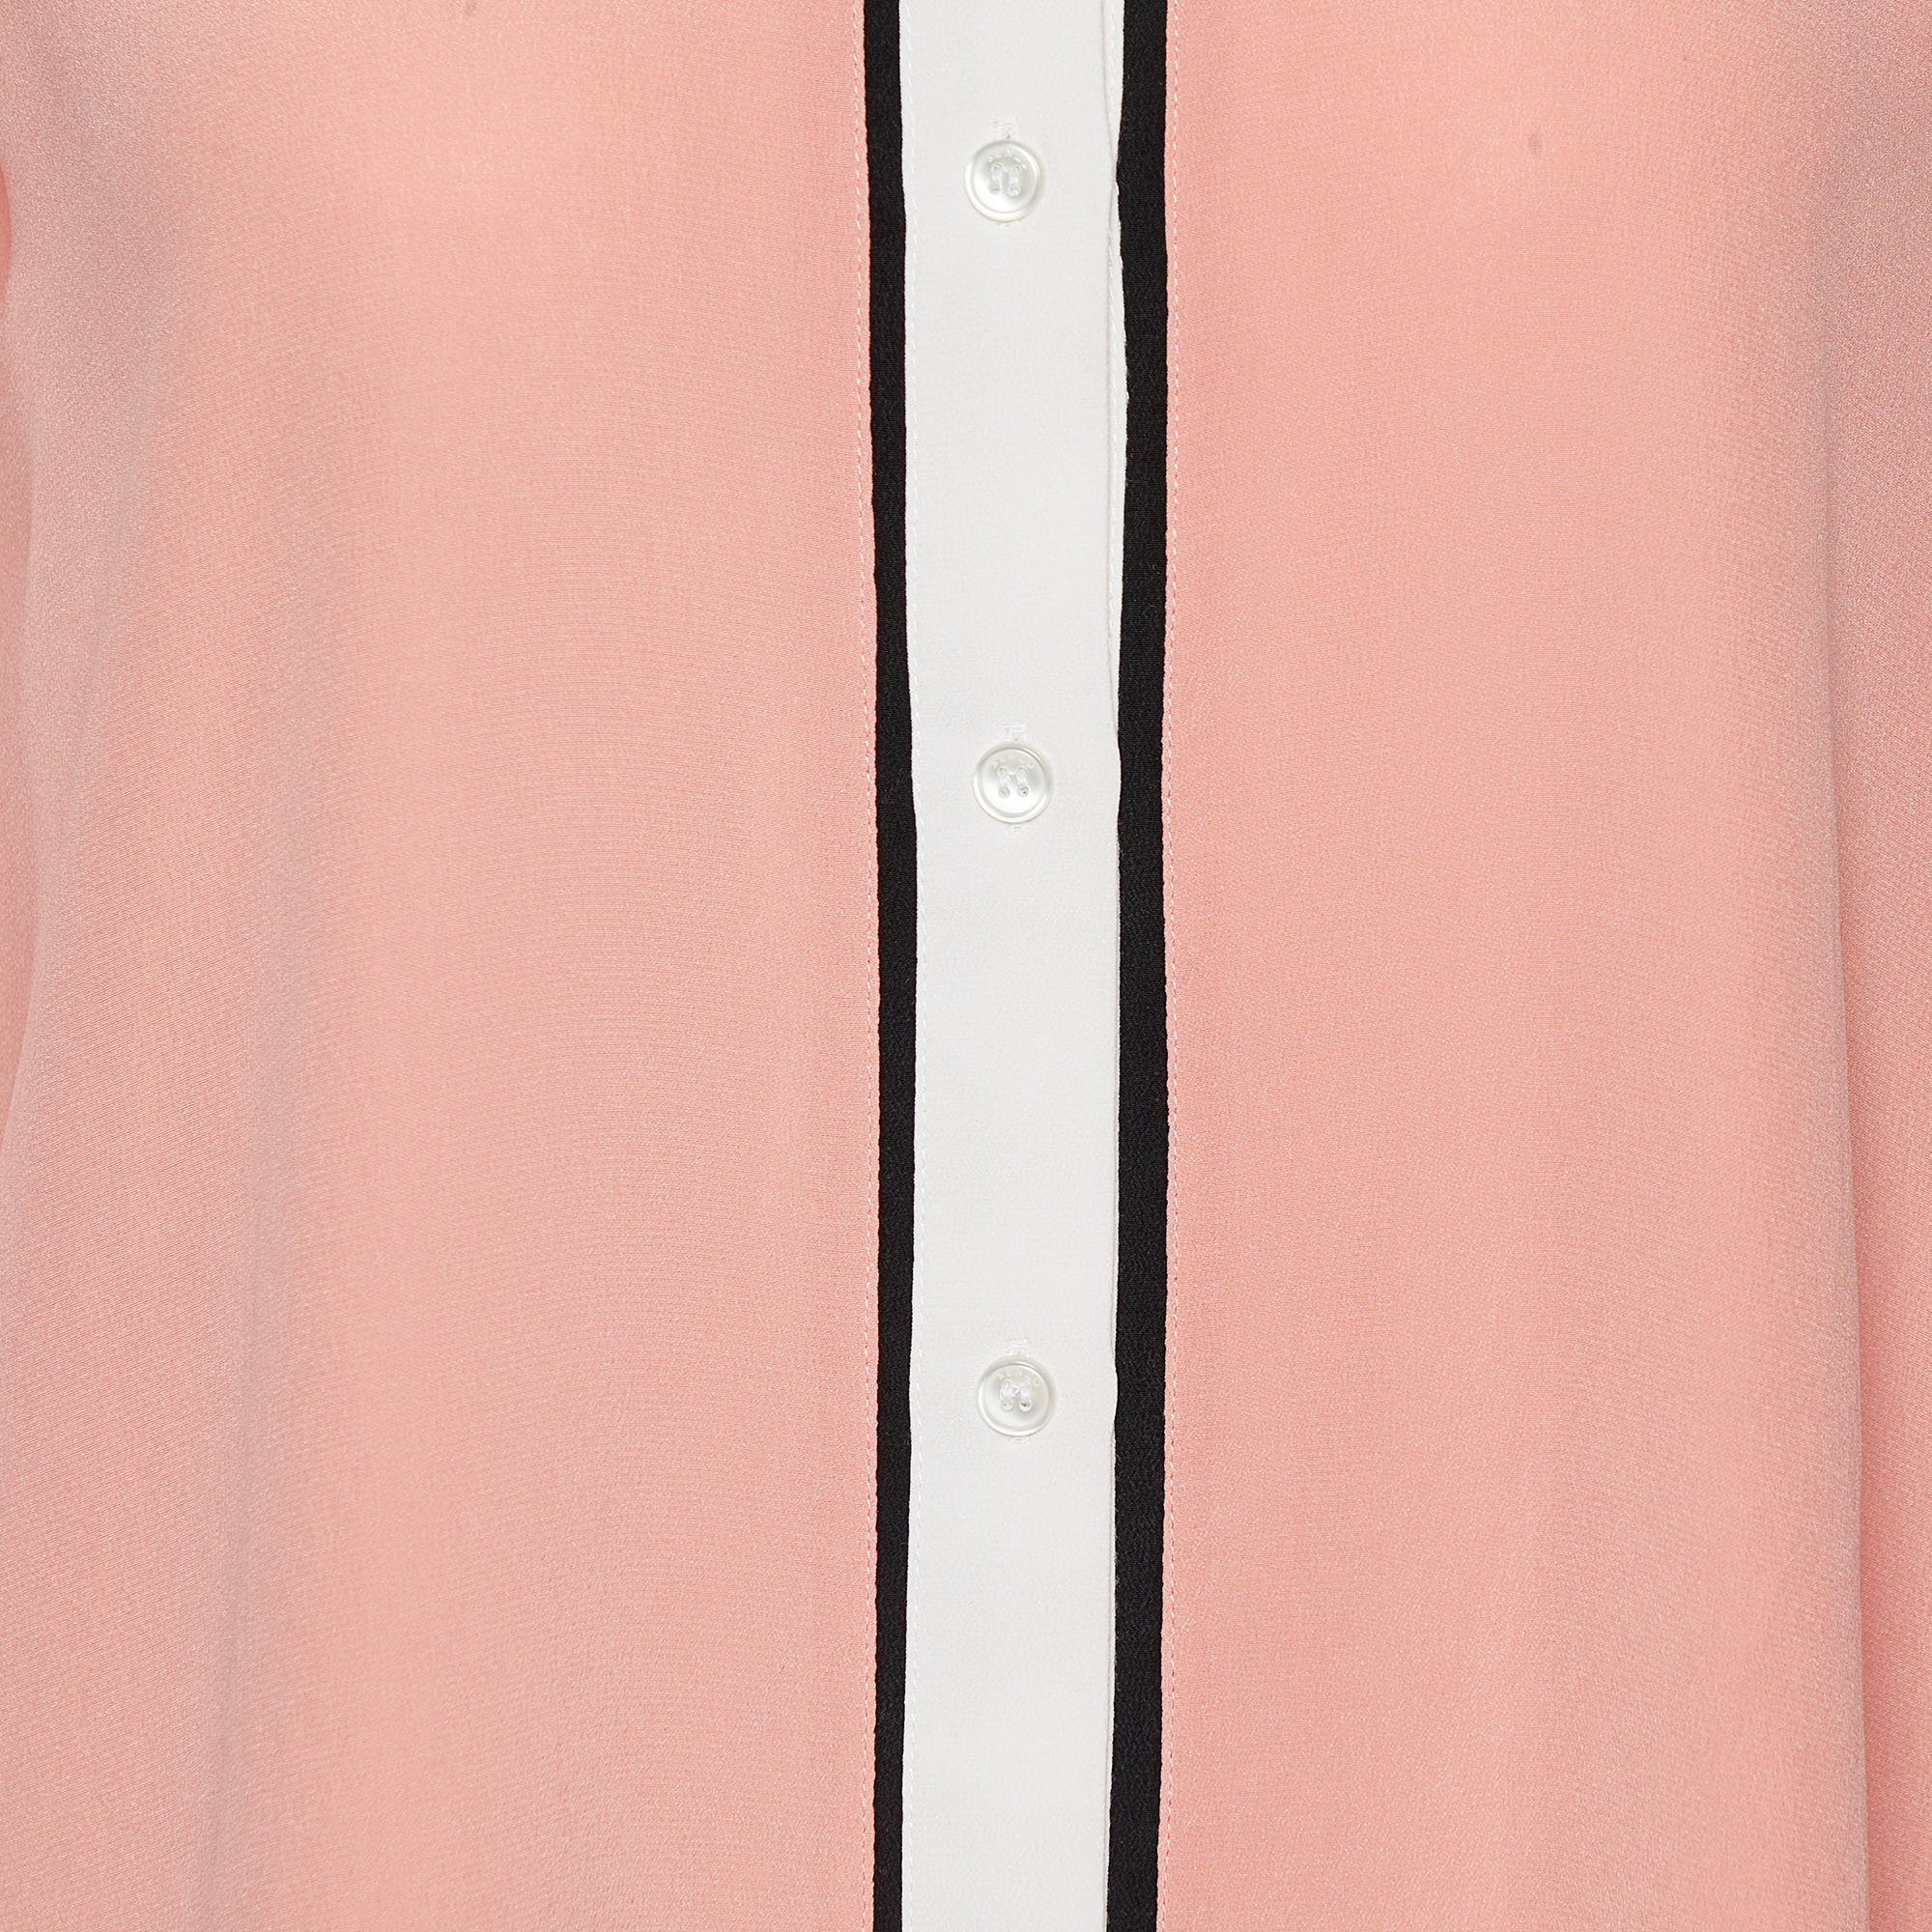 Kenzo Pink Silk Contrast Detail Stand Collar Shirt S